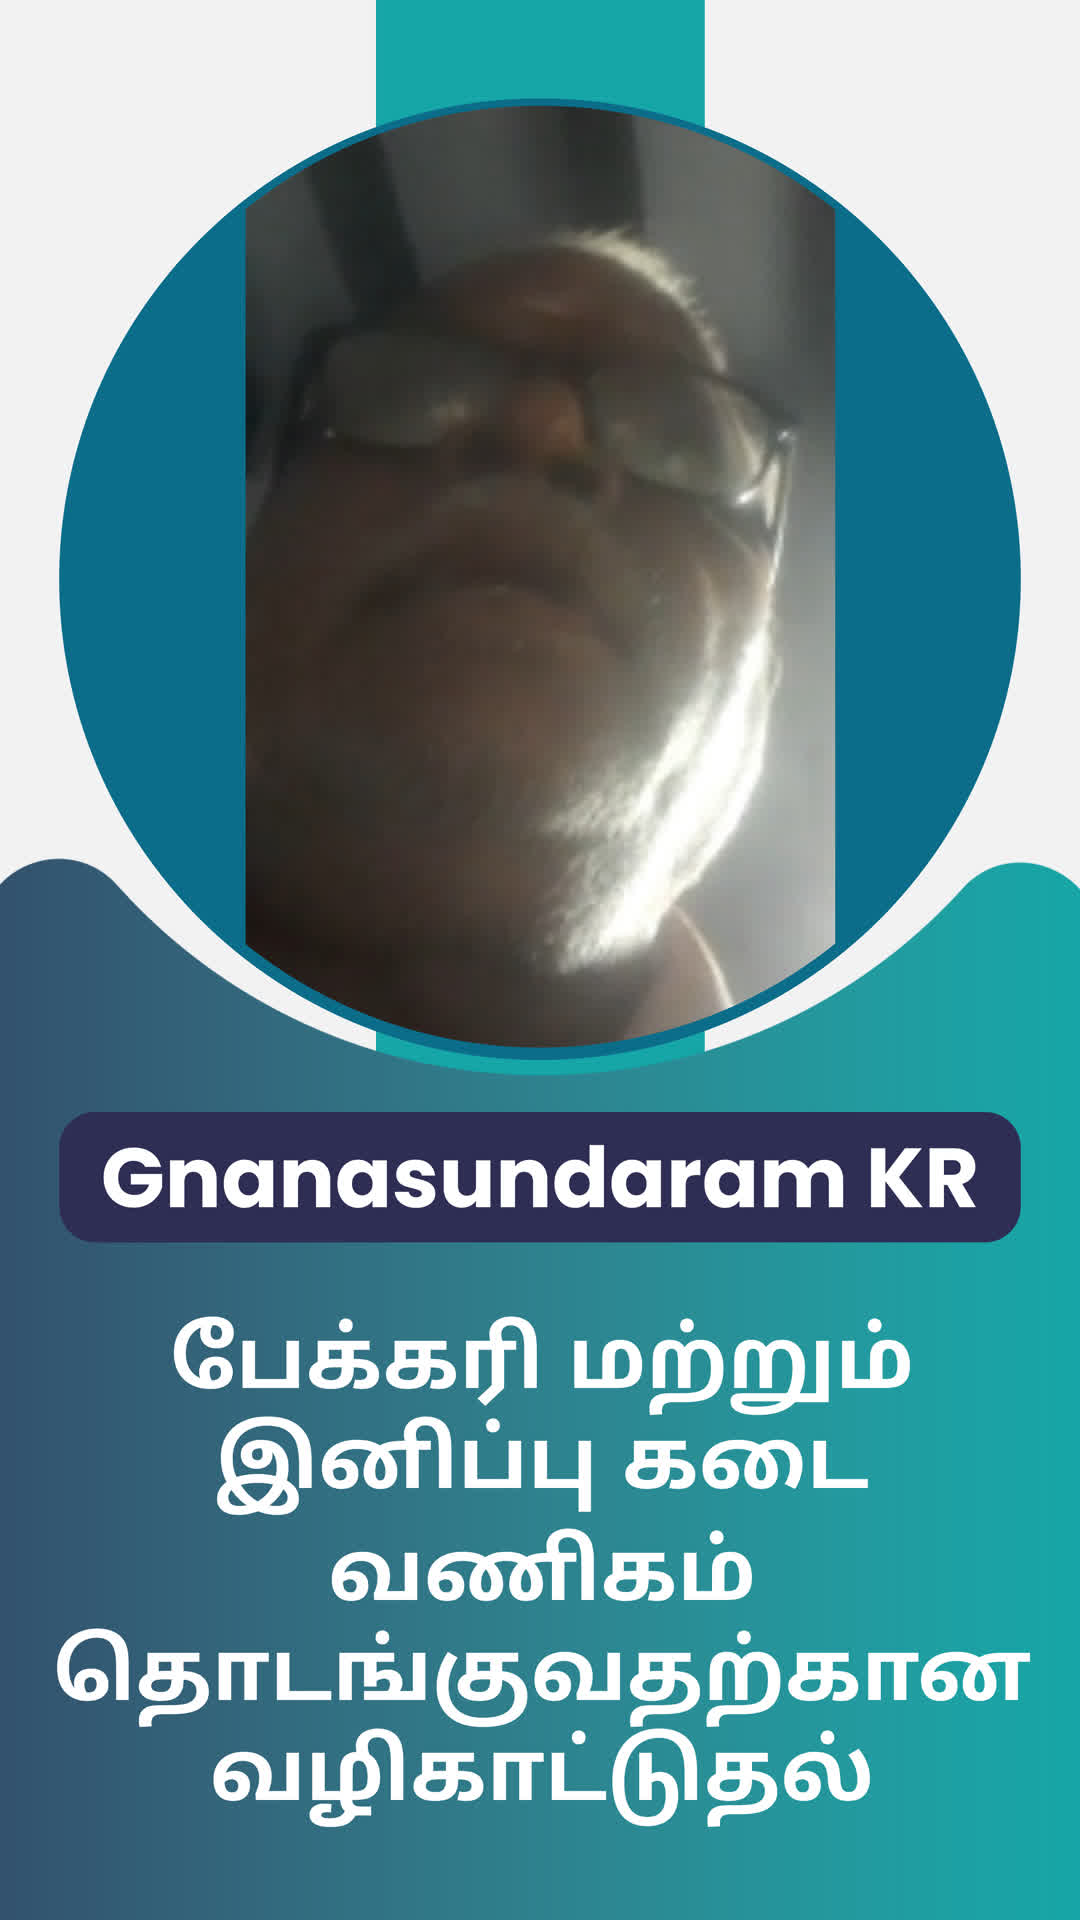 Gnanavel Janakiraman's Honest Review of ffreedom app - Puducherry ,Tamil Nadu